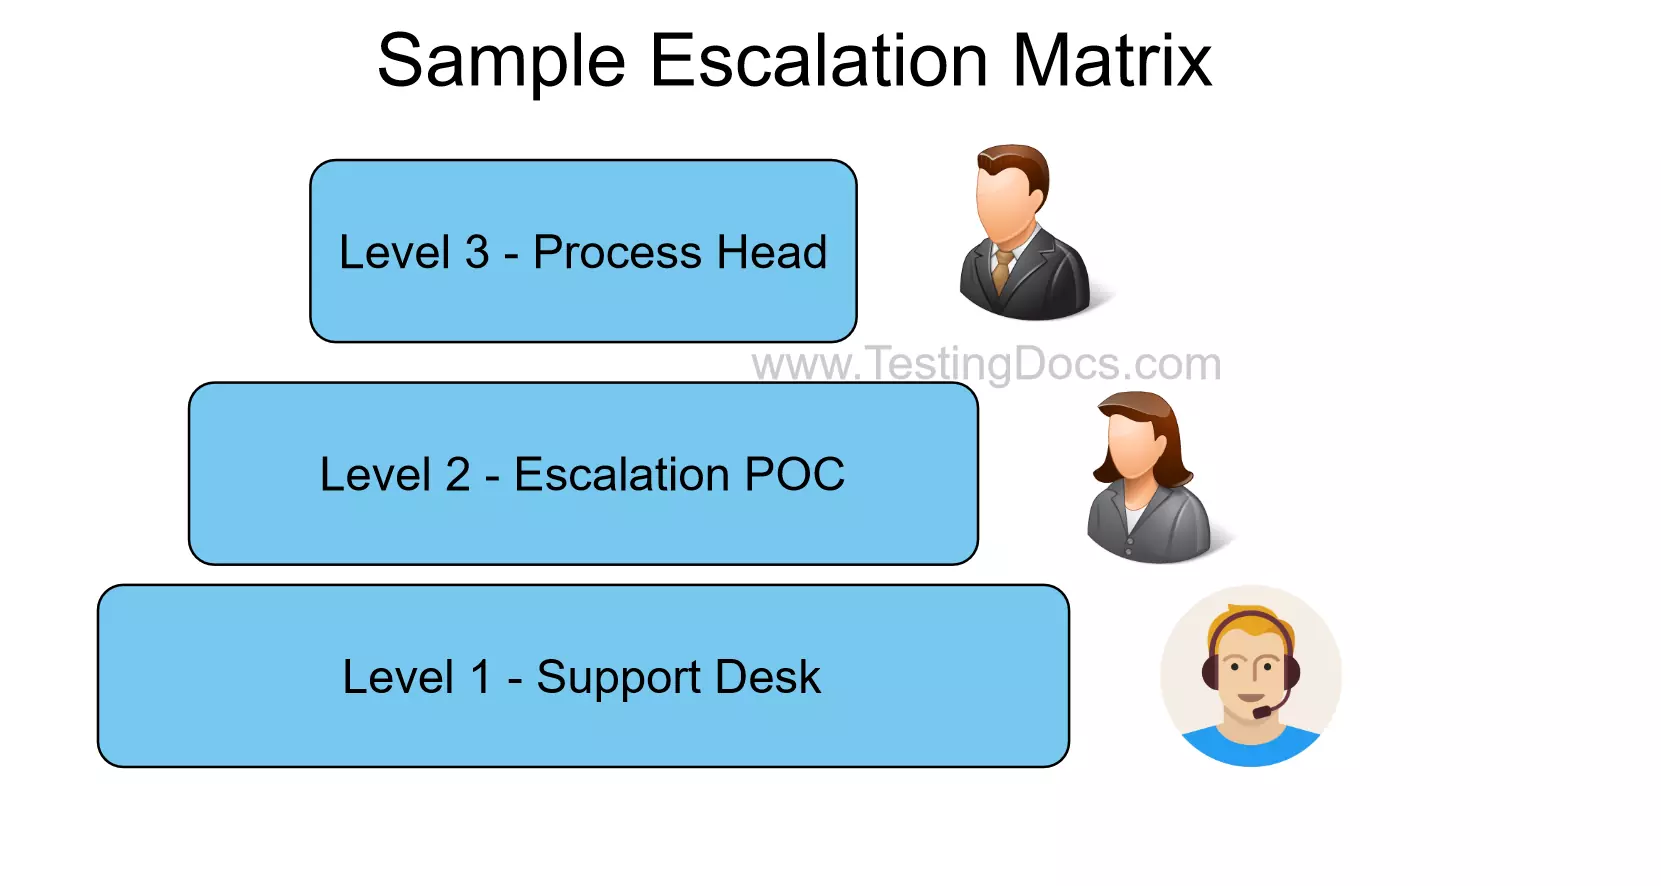 Sample Escalation Matrix